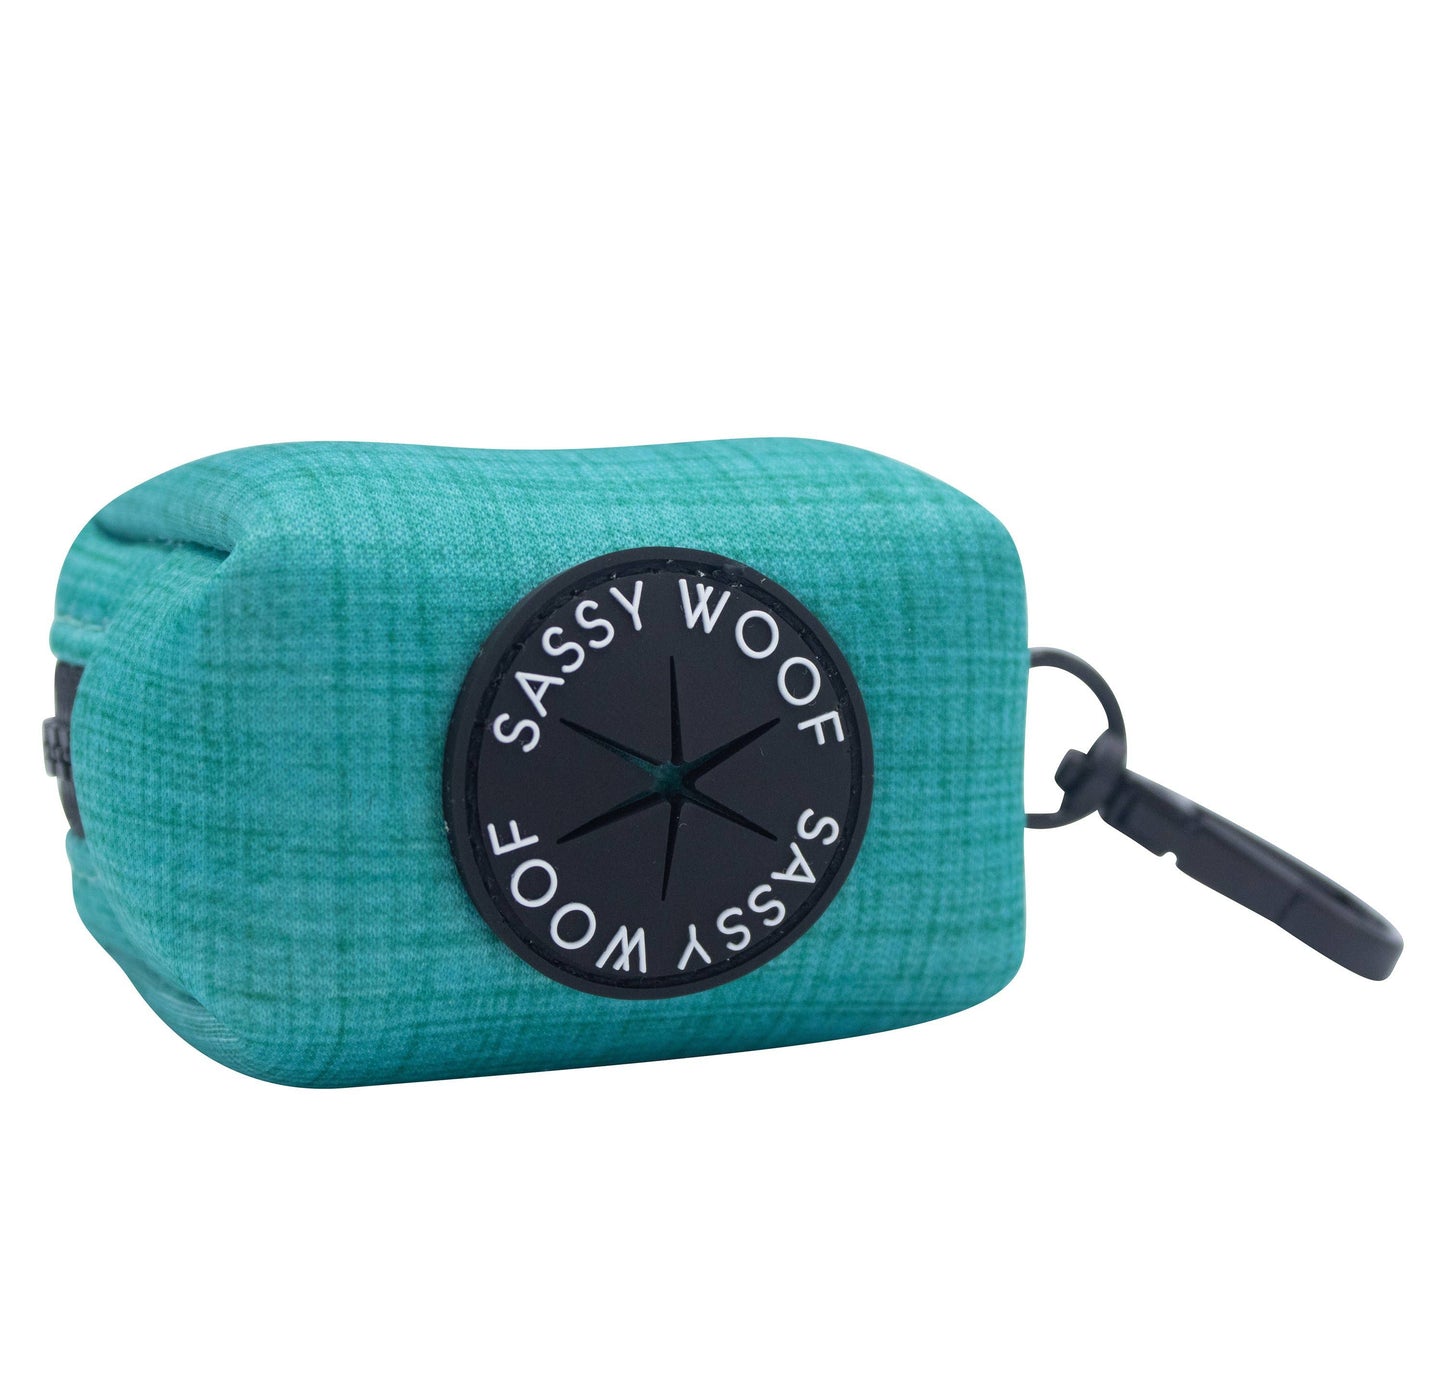 Borsetta portasacchetti Napa - 'Napa' Dog Waste Bag Holder